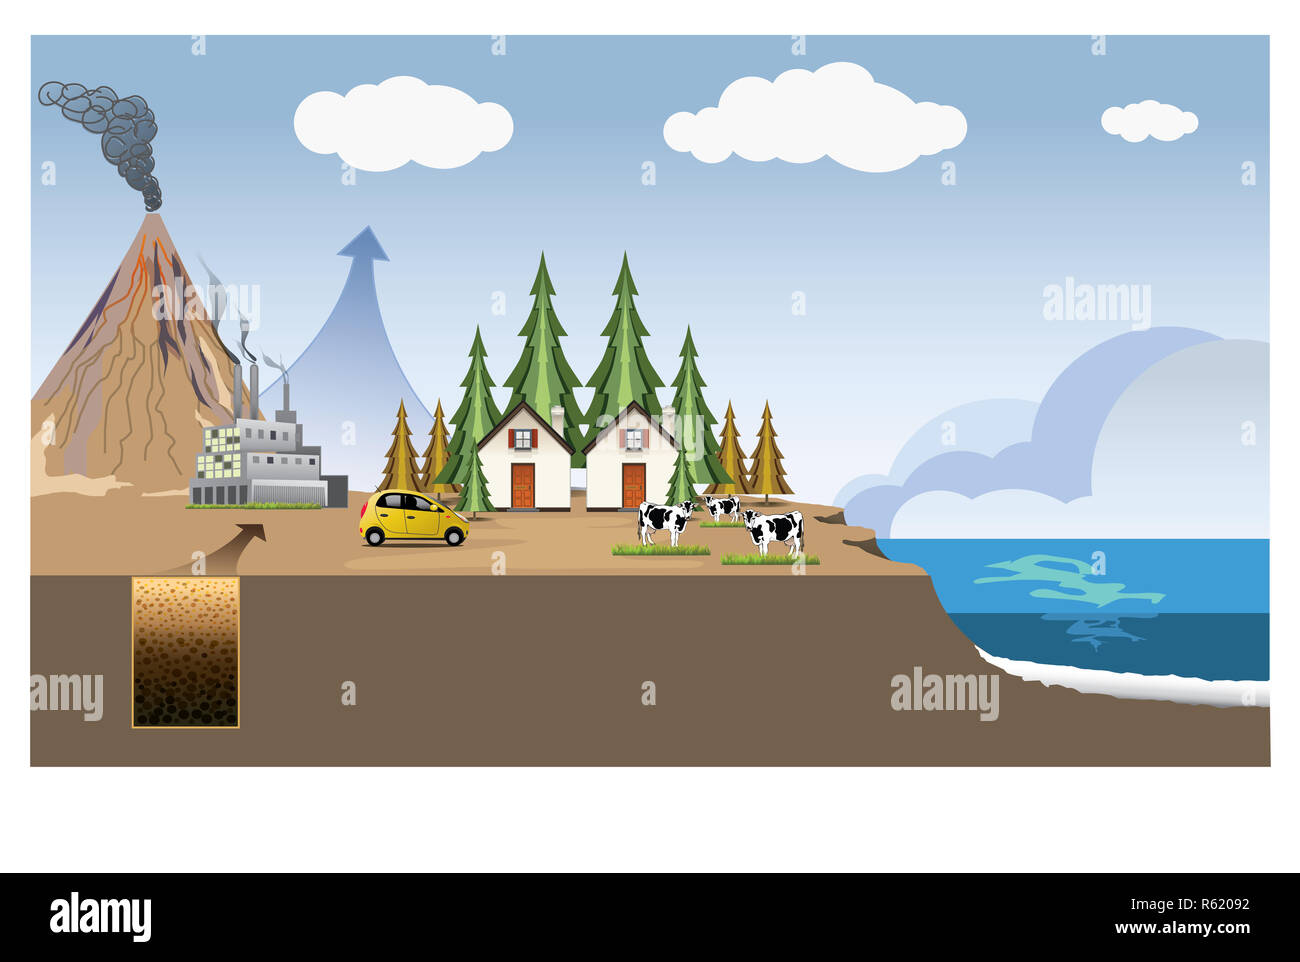 Biomass Energy system process. Illustration. Stock Photo